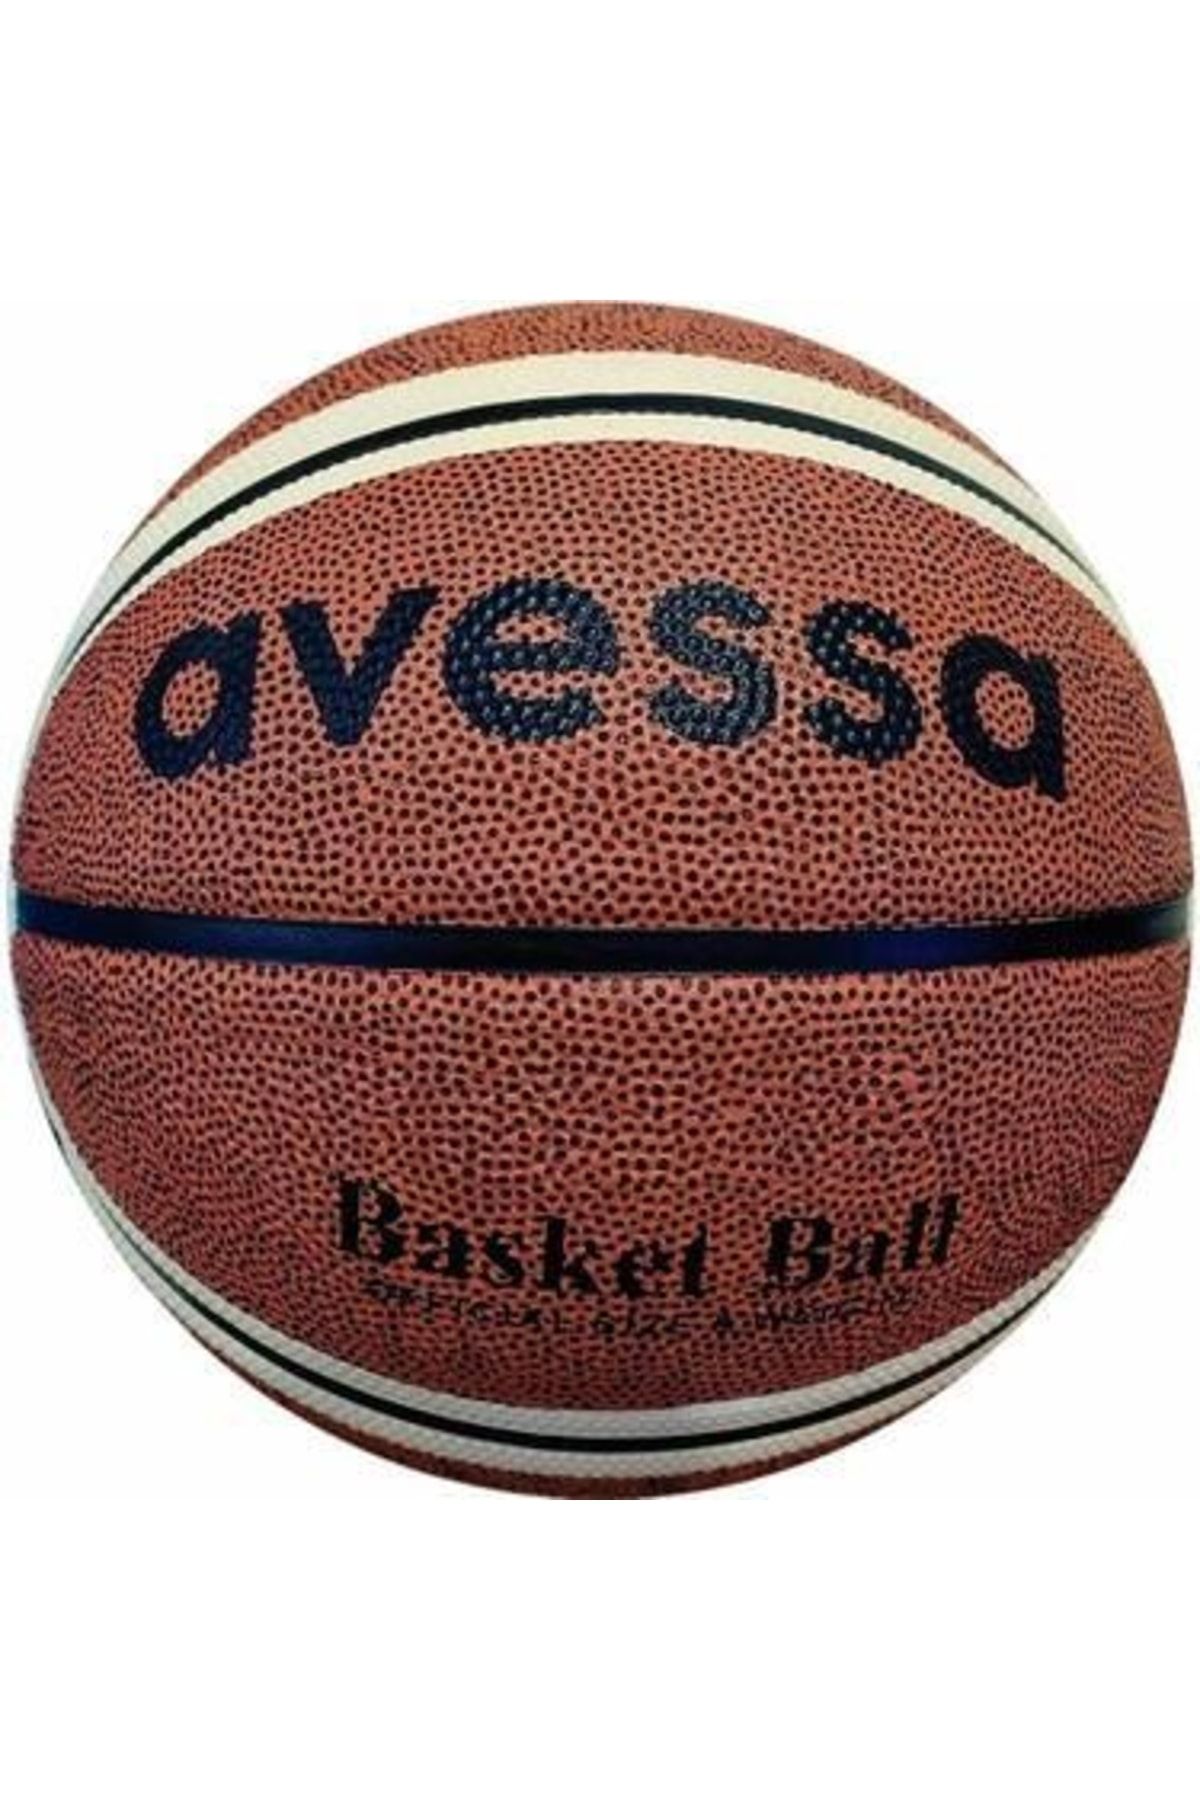 Avessa Basketbol Topu No:5 Bt-170